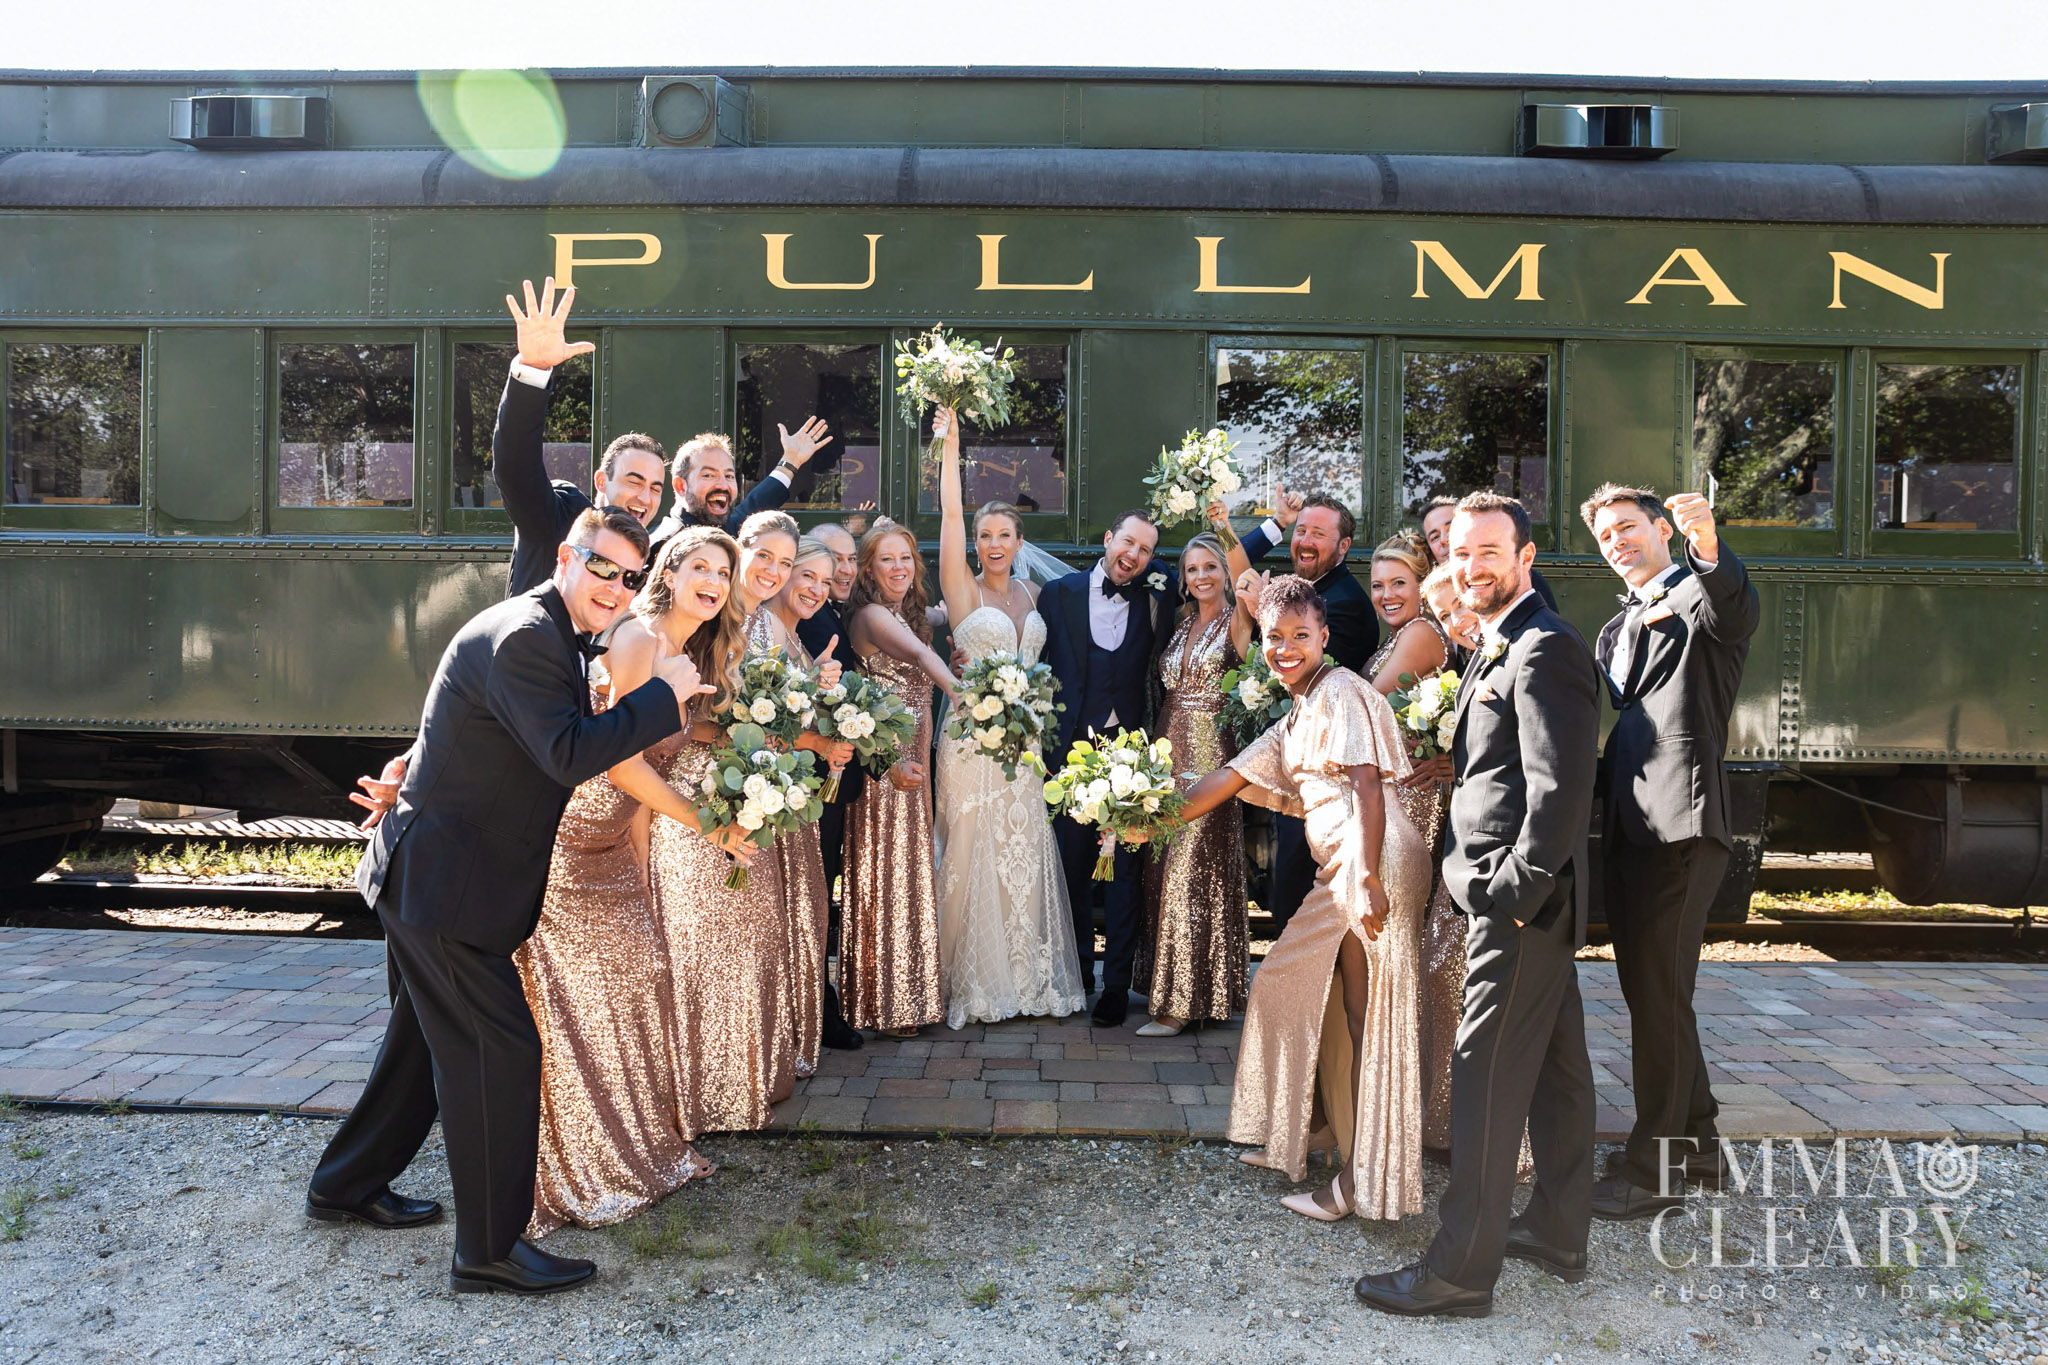 Essex Steam Train and Riverboat Wedding